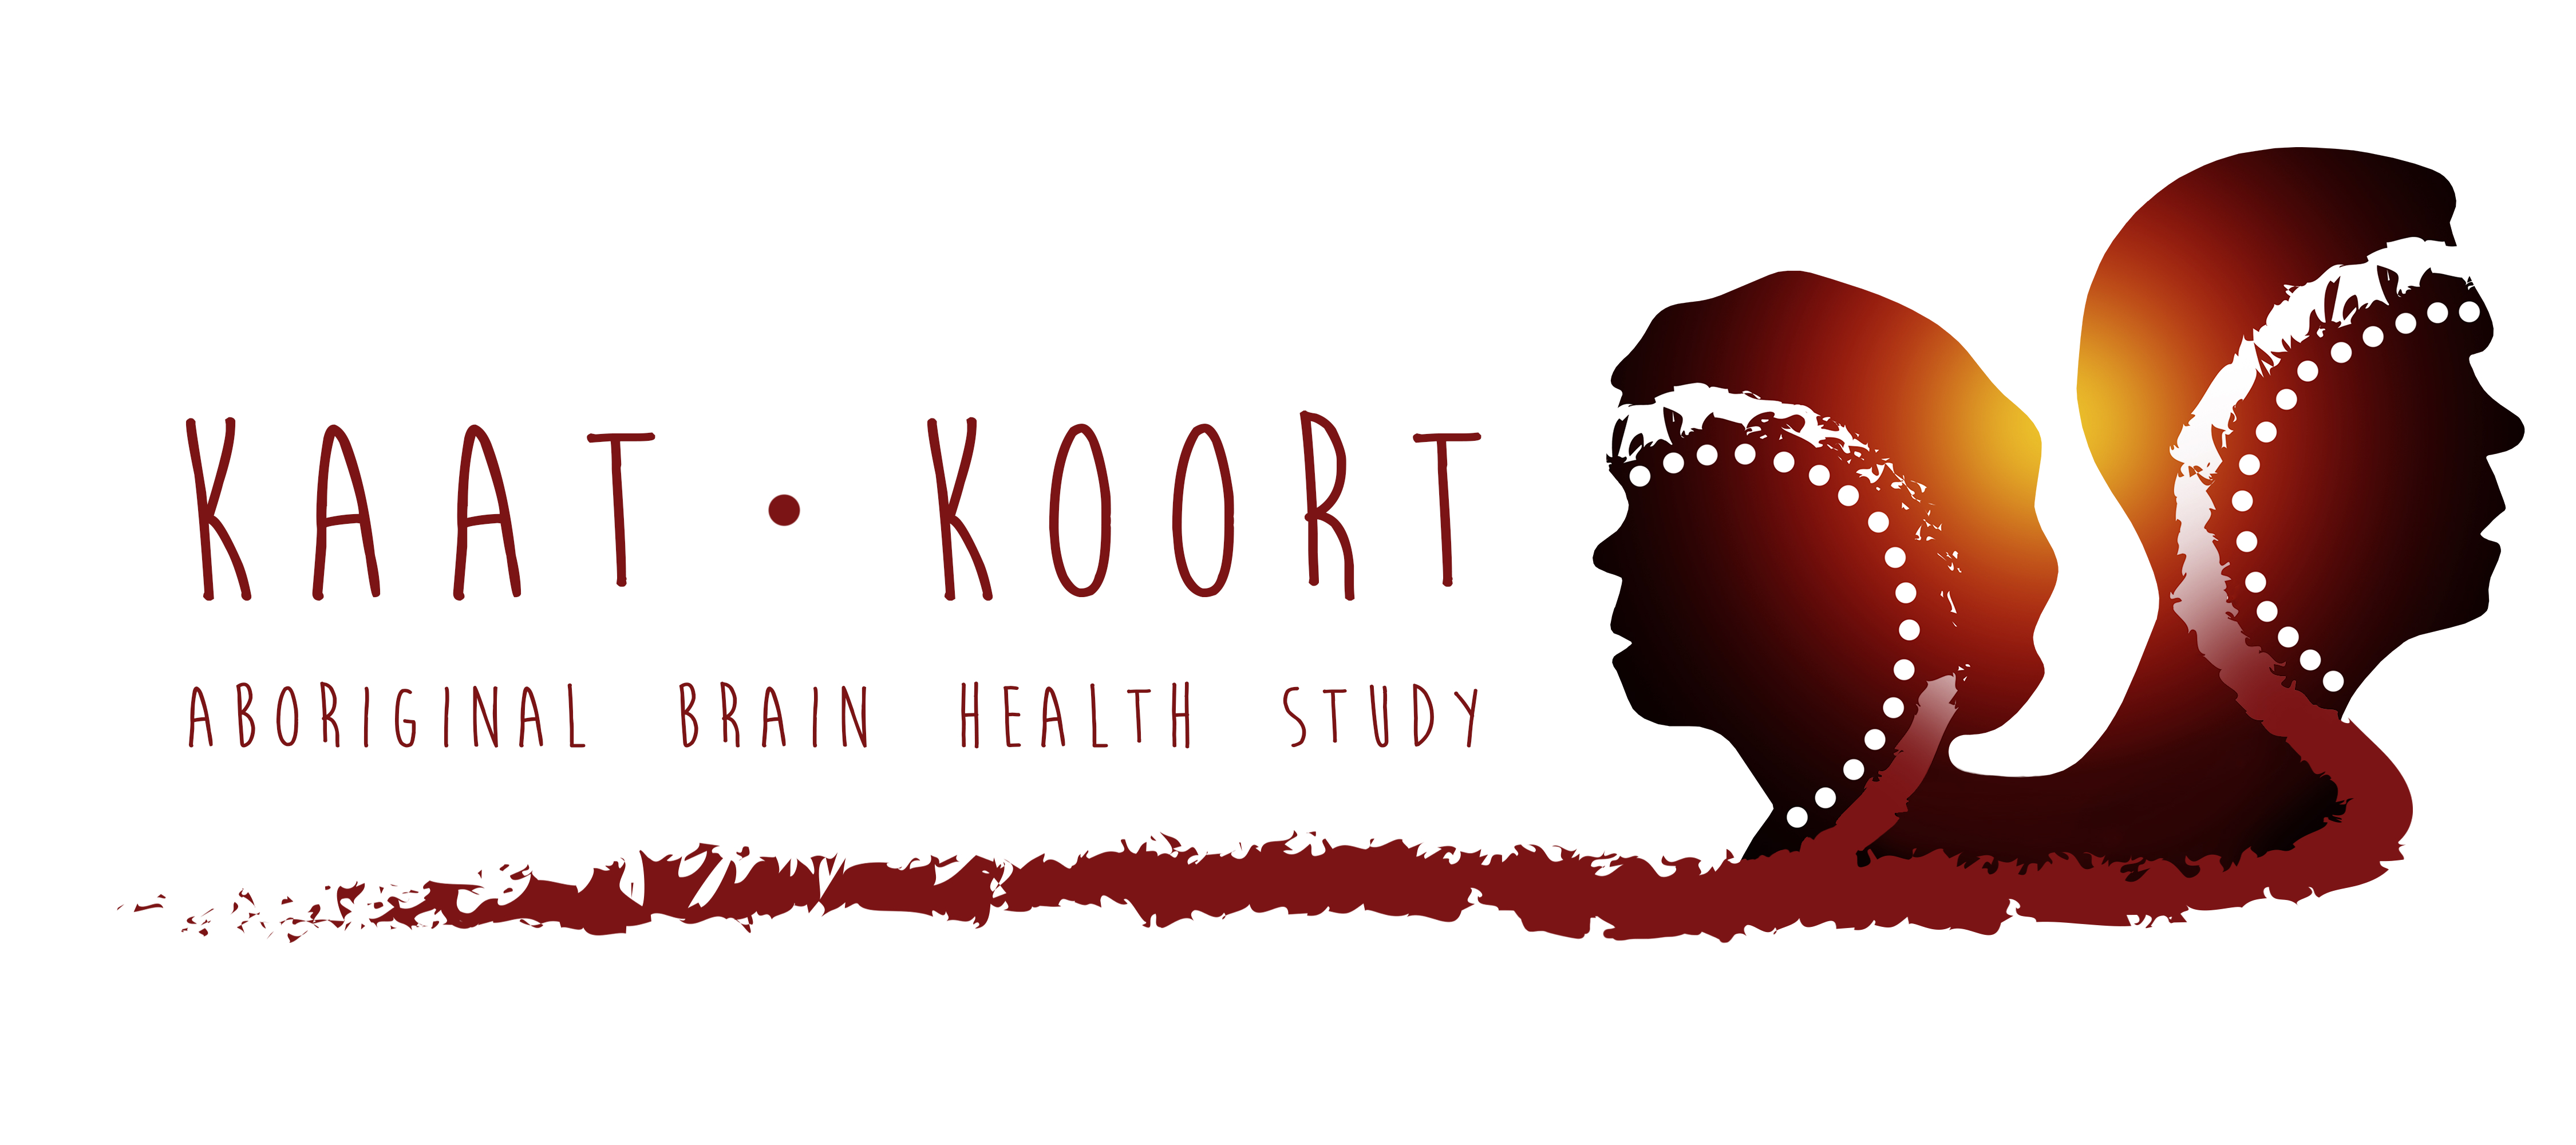 Kaat Koort - Aboriginal Brain Health Study